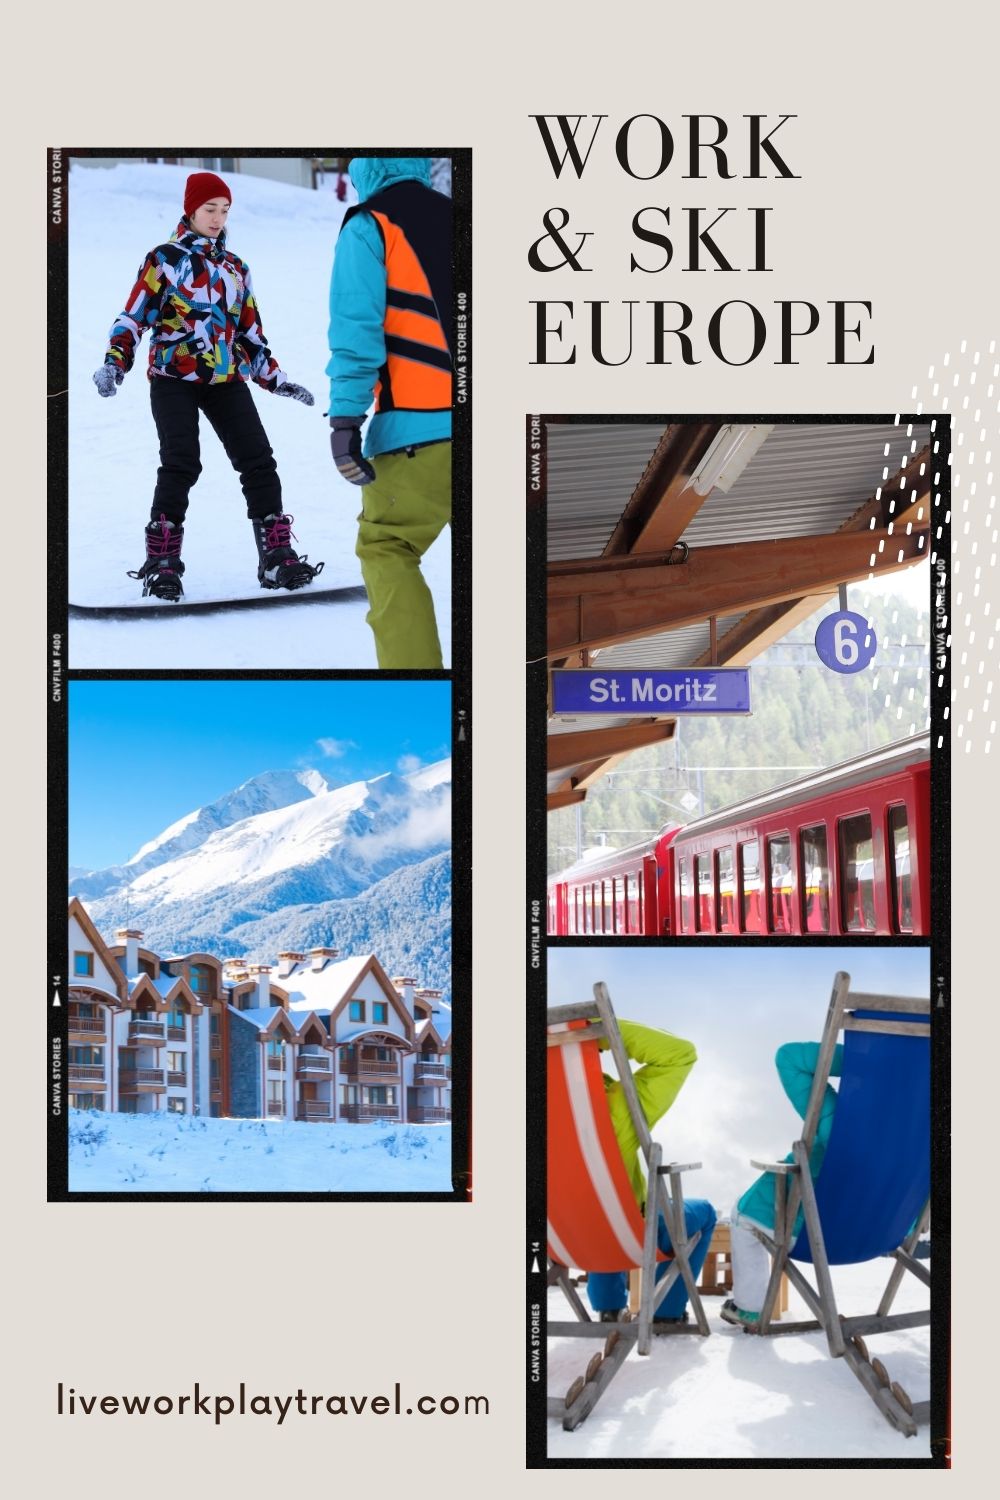 Ski and Work In Europe PIN. 4 Images - Snowboard Instructor, Ski Resort, St Moritz Train Station And Apres Ski.